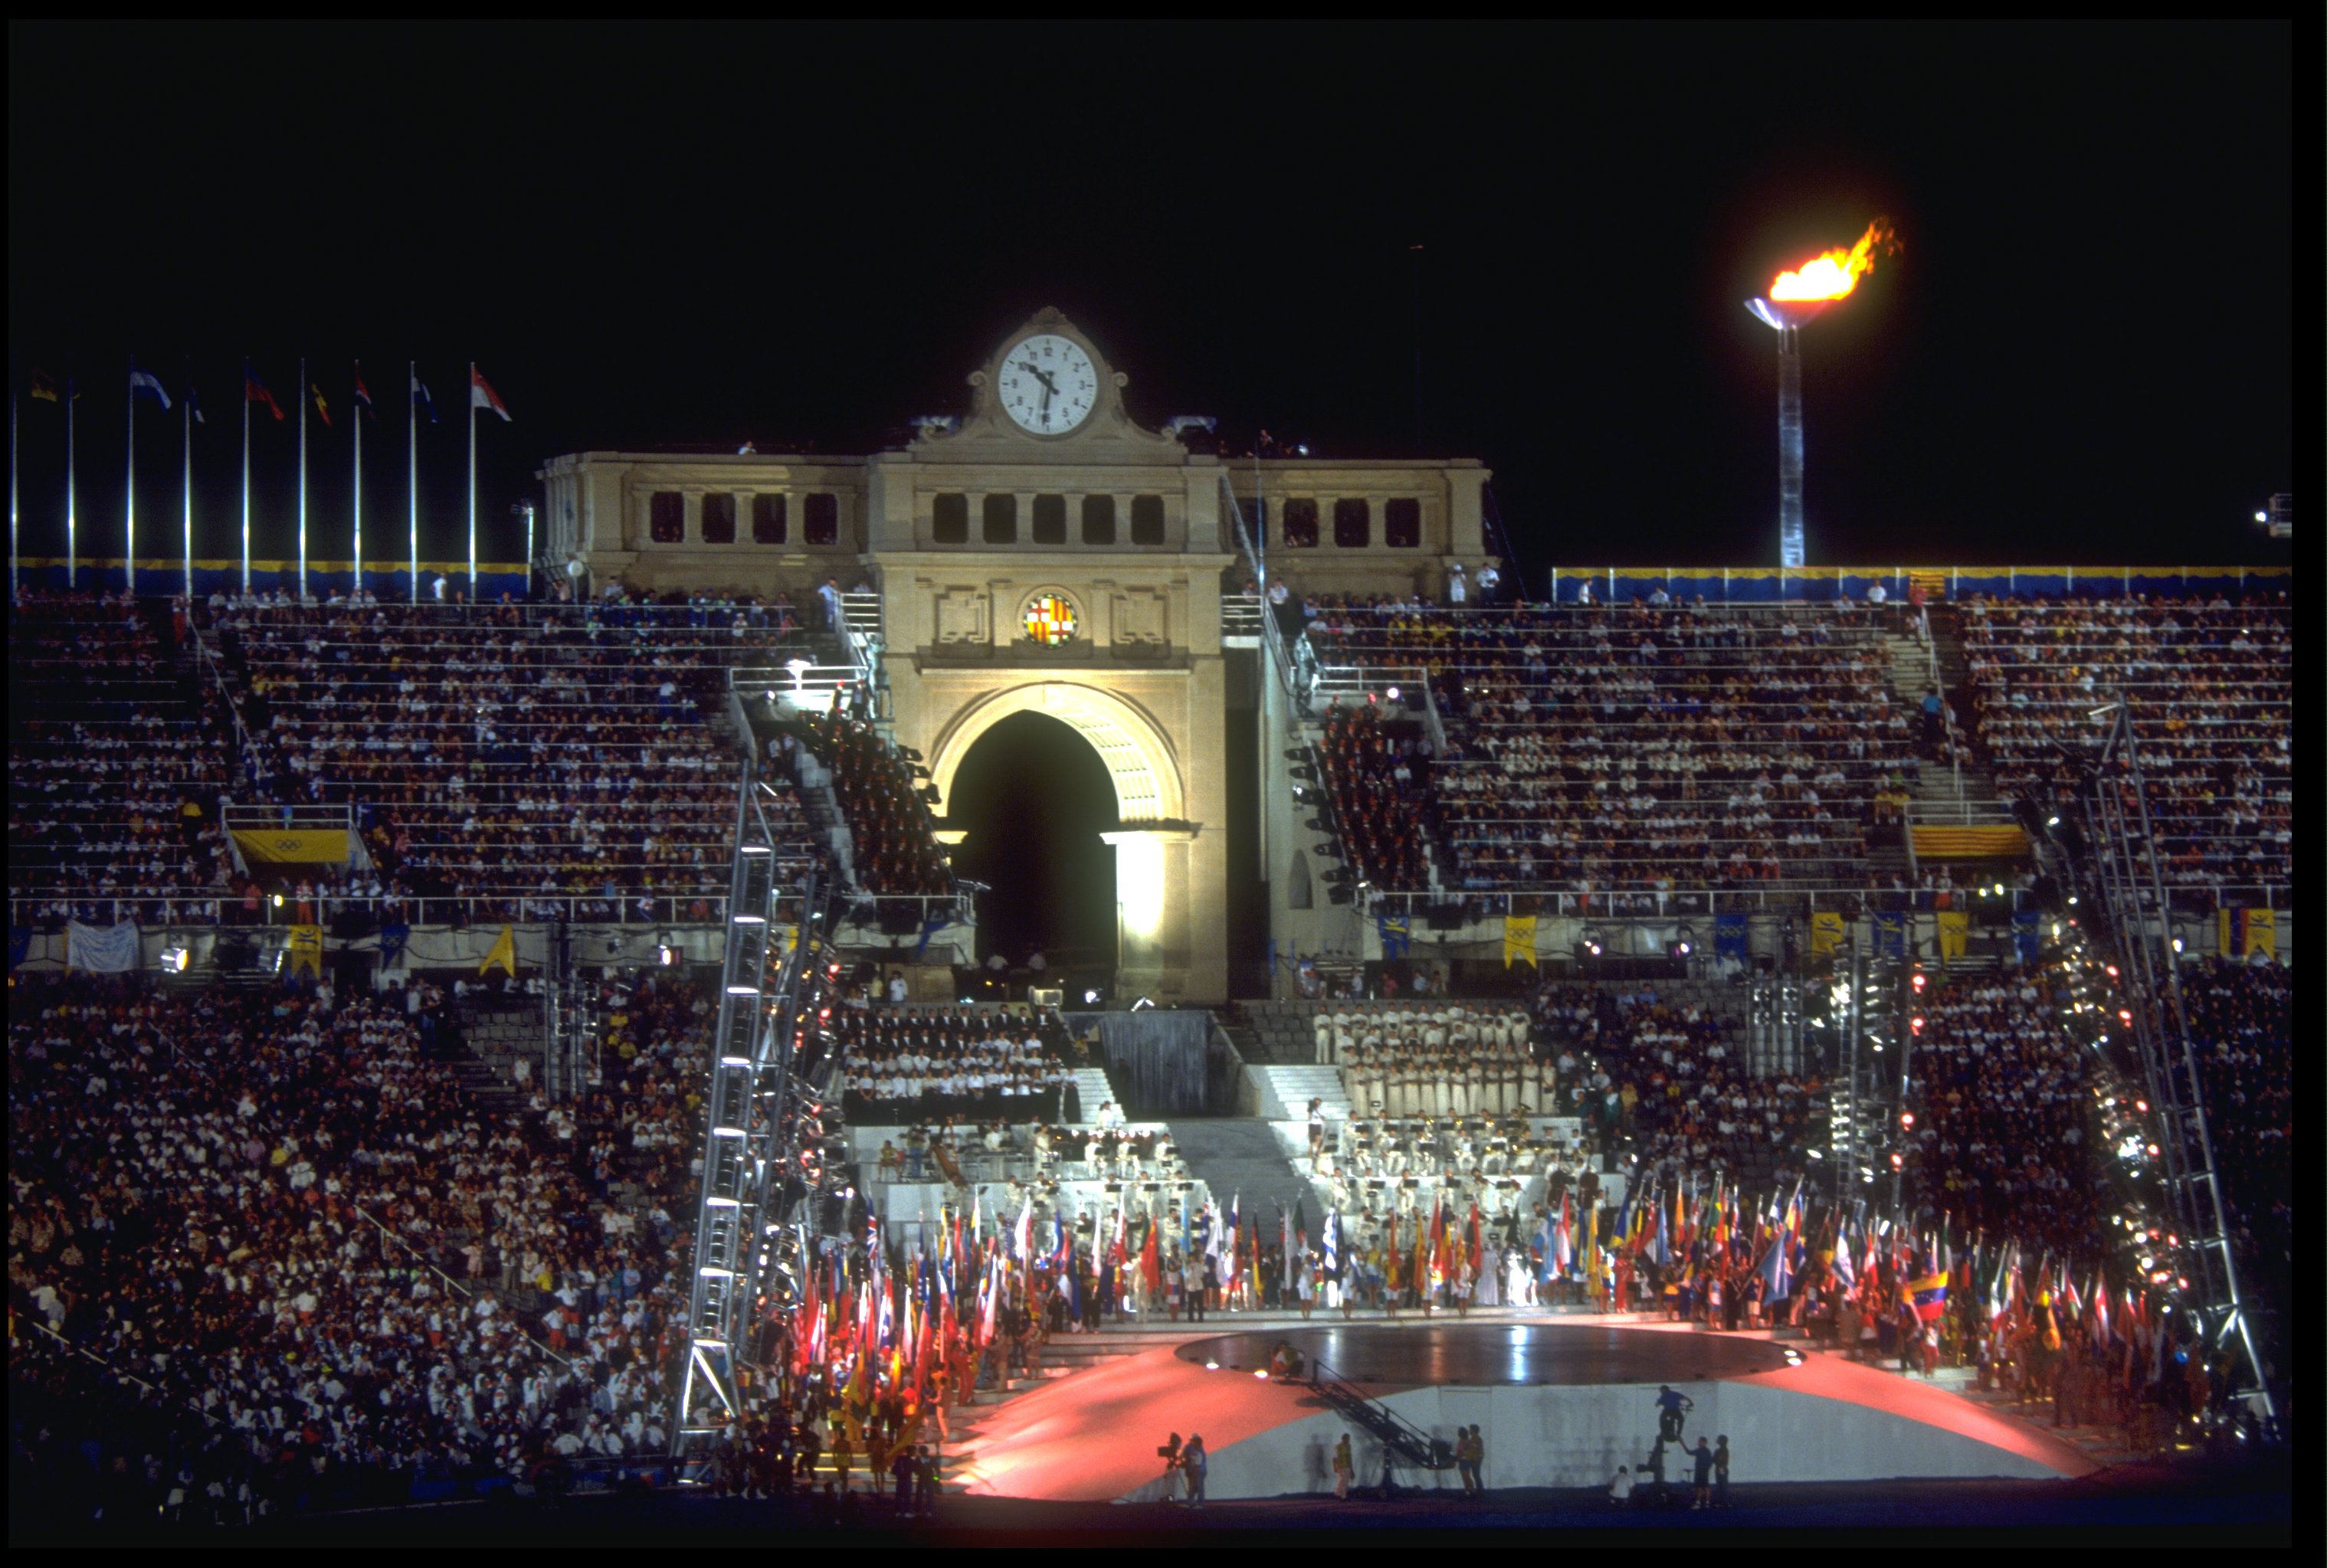 Barcelona 1992 | New Zealand Olympic Team3037 x 2047